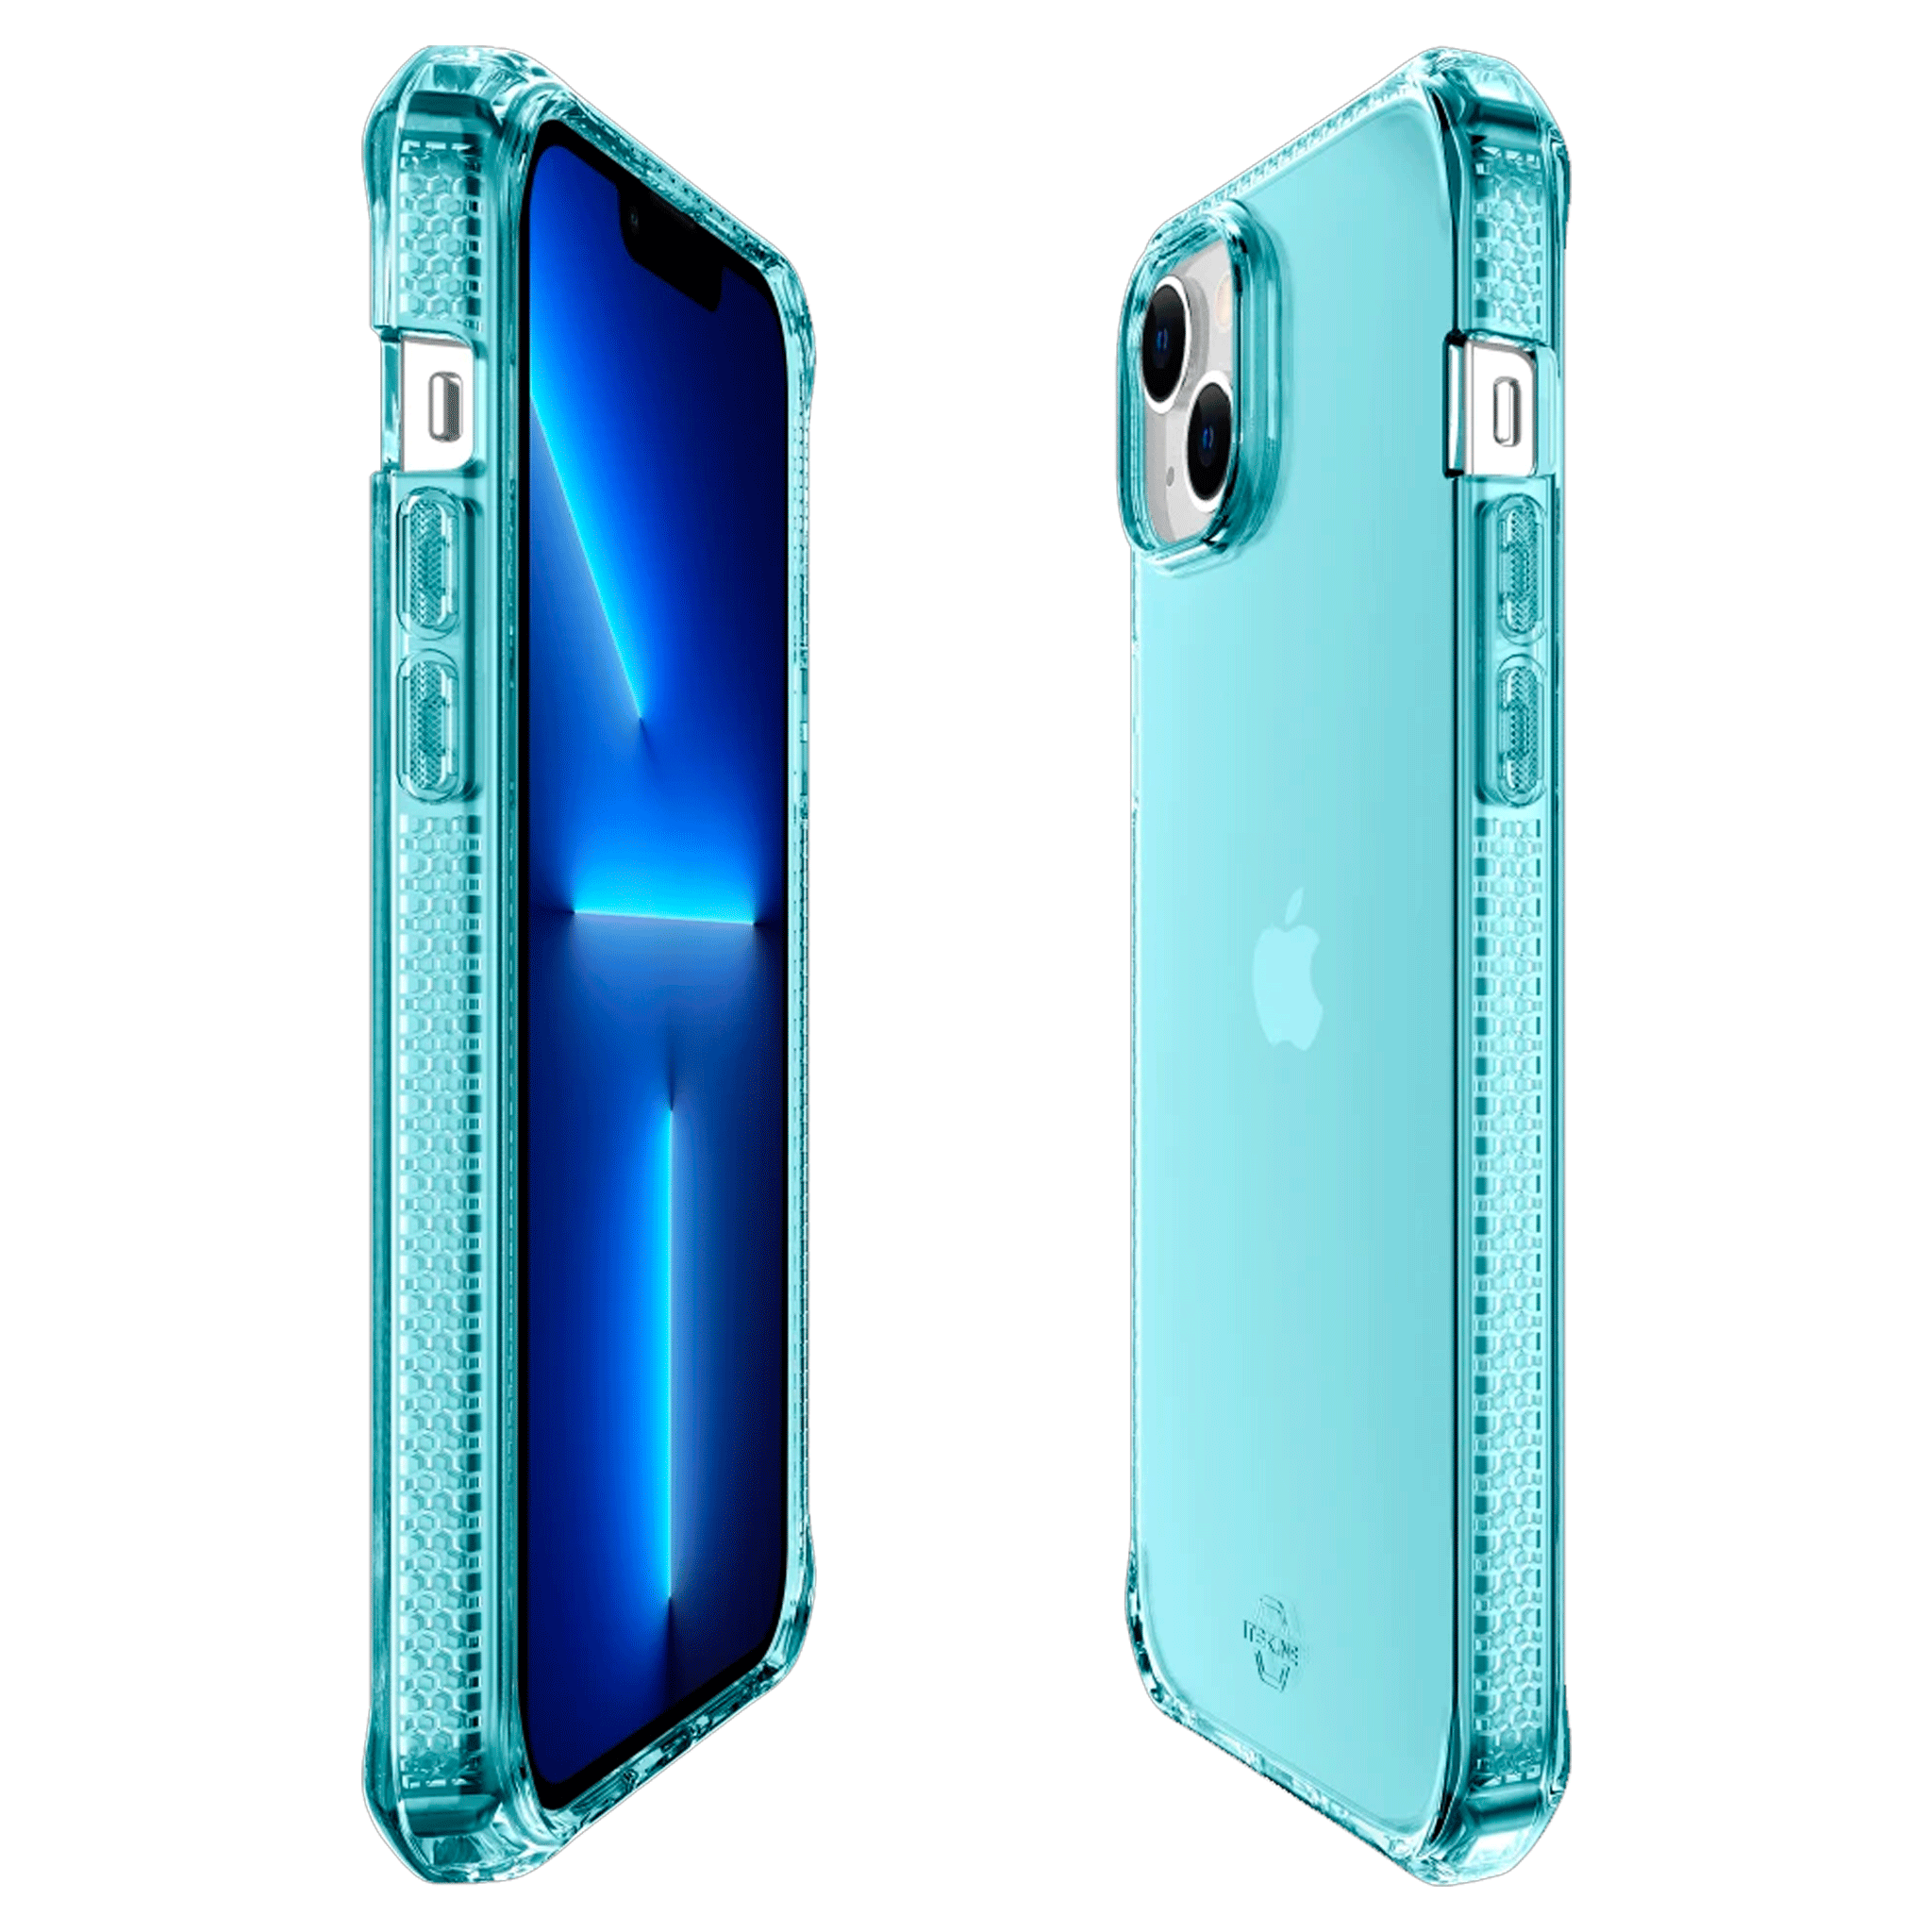 Itskins - Spectrum_r Clear Case For Apple Iphone 14 Plus - Light Blue